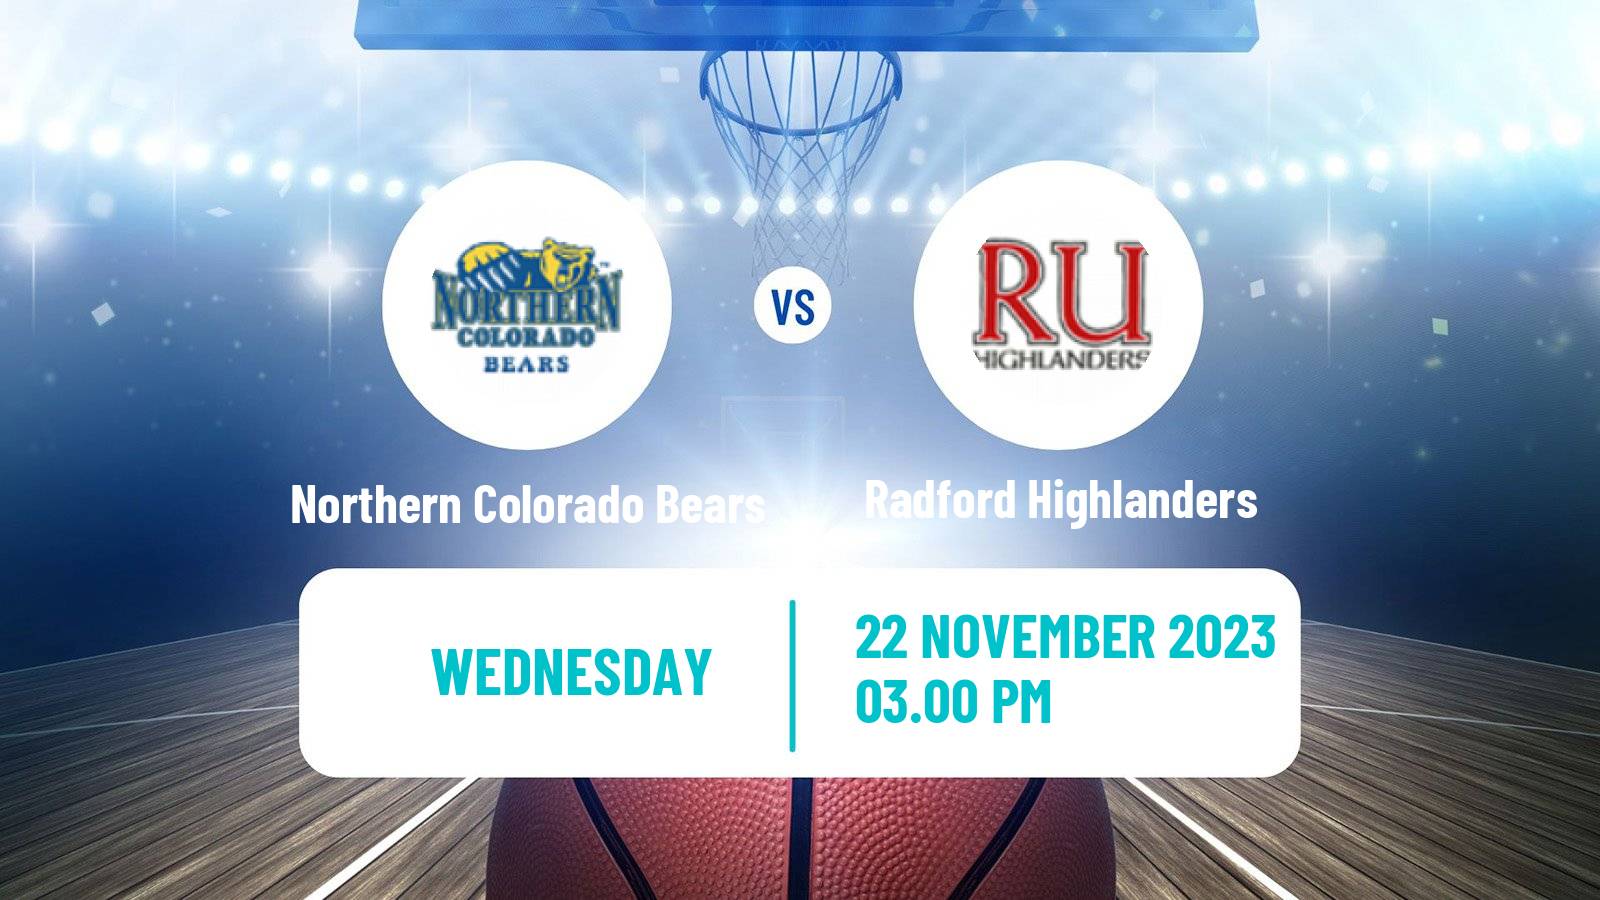 Basketball NCAA College Basketball Northern Colorado Bears - Radford Highlanders